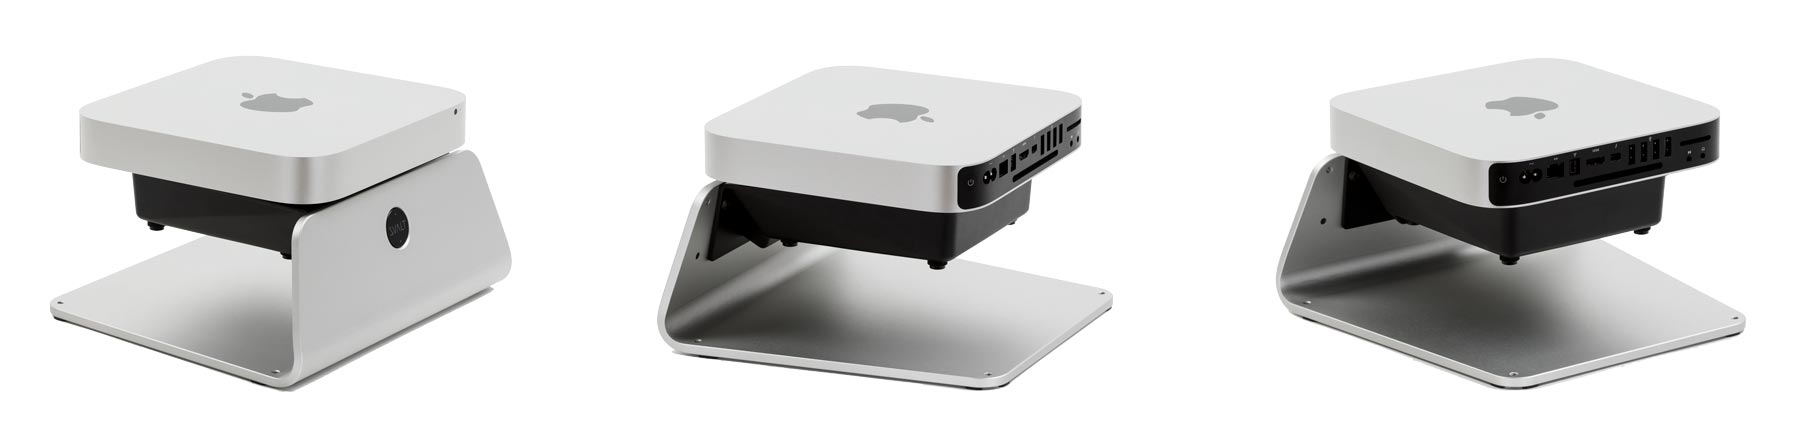 SVALT Cooling Stand model S Mini with Mac Mini